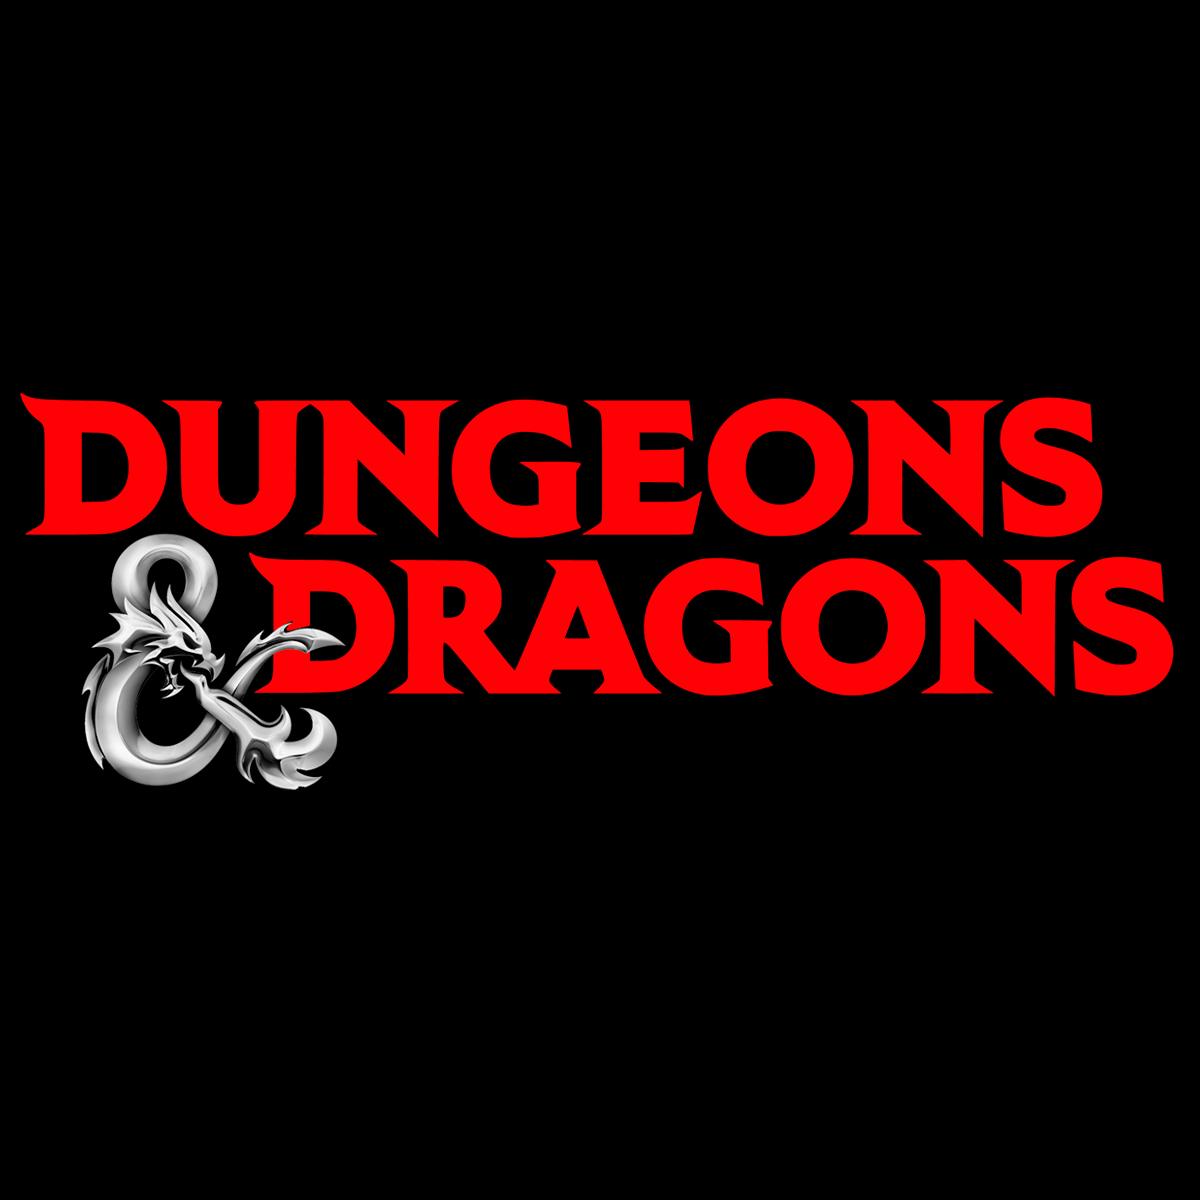 Dungeons and Dragons Minitomo Clérigo Deck RPG